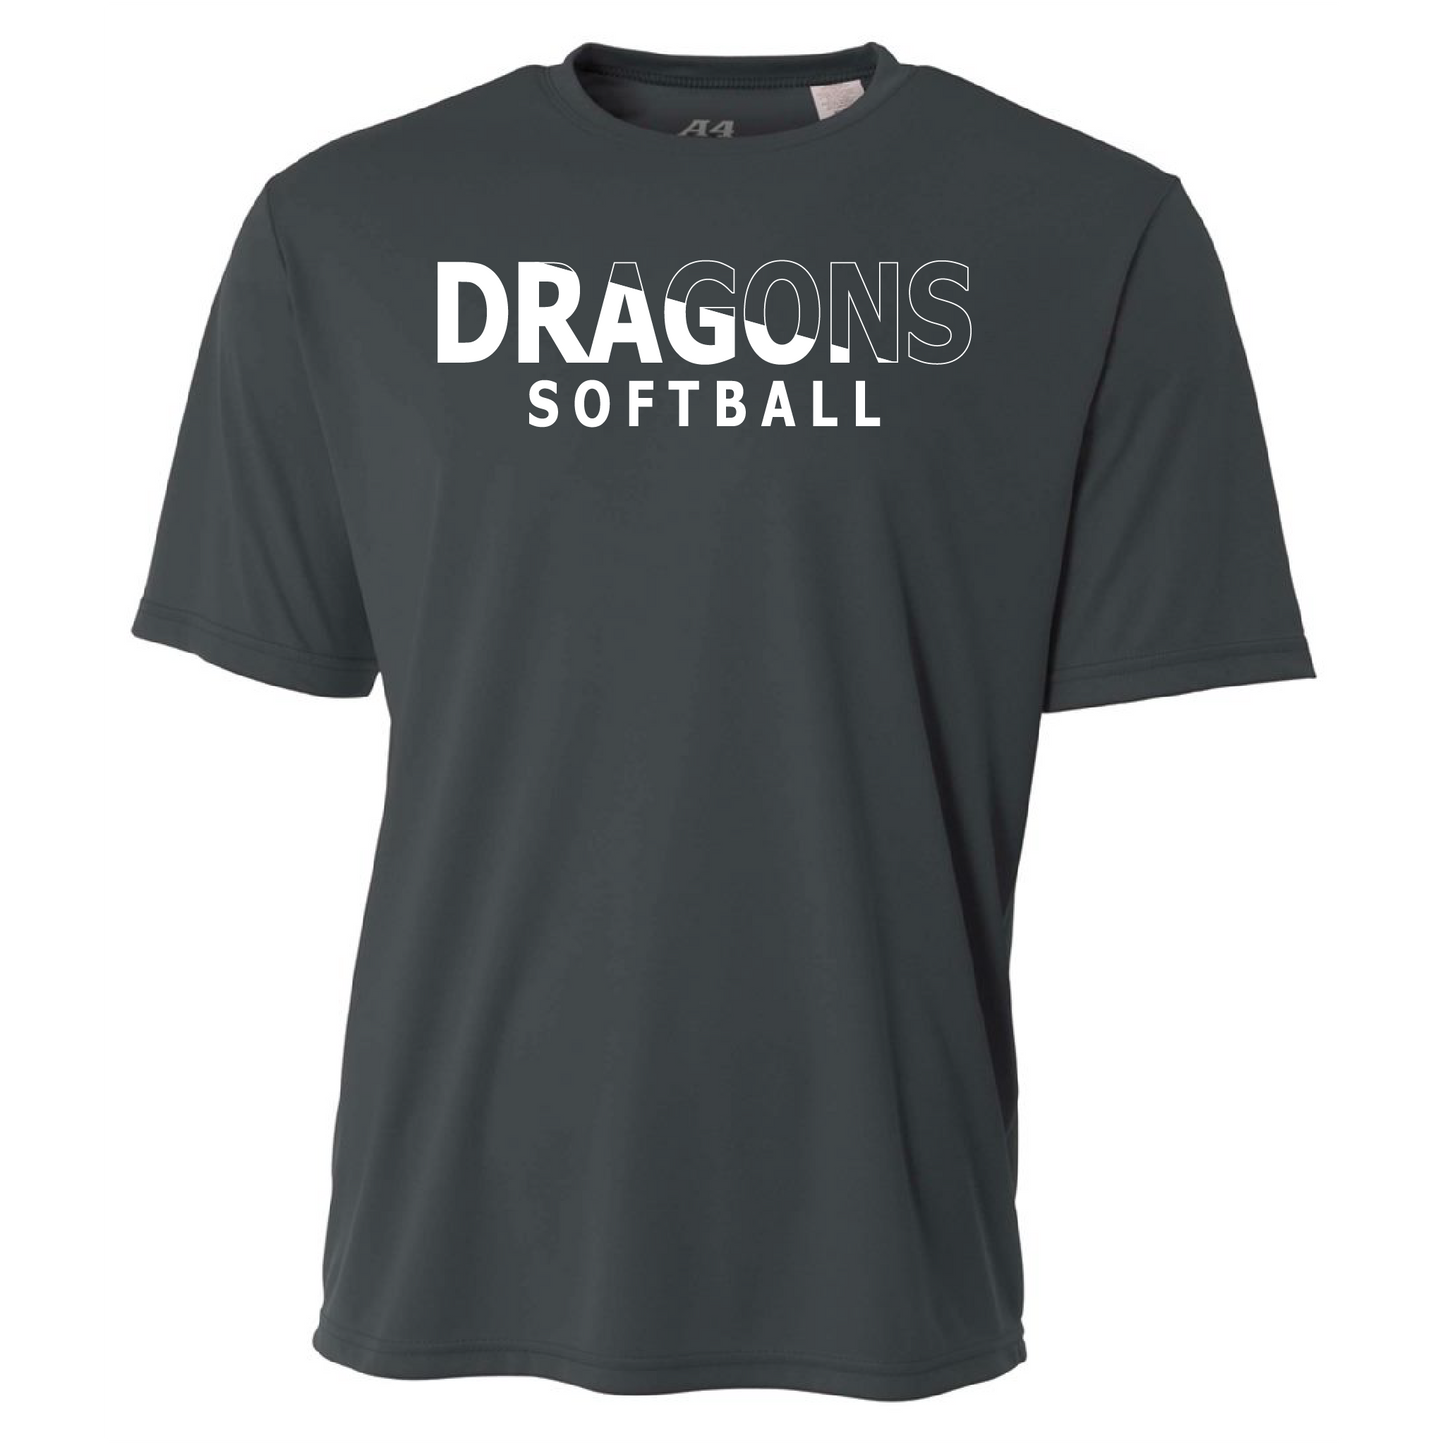 Mens S/S T-Shirt - Dragons Softball Slashed White